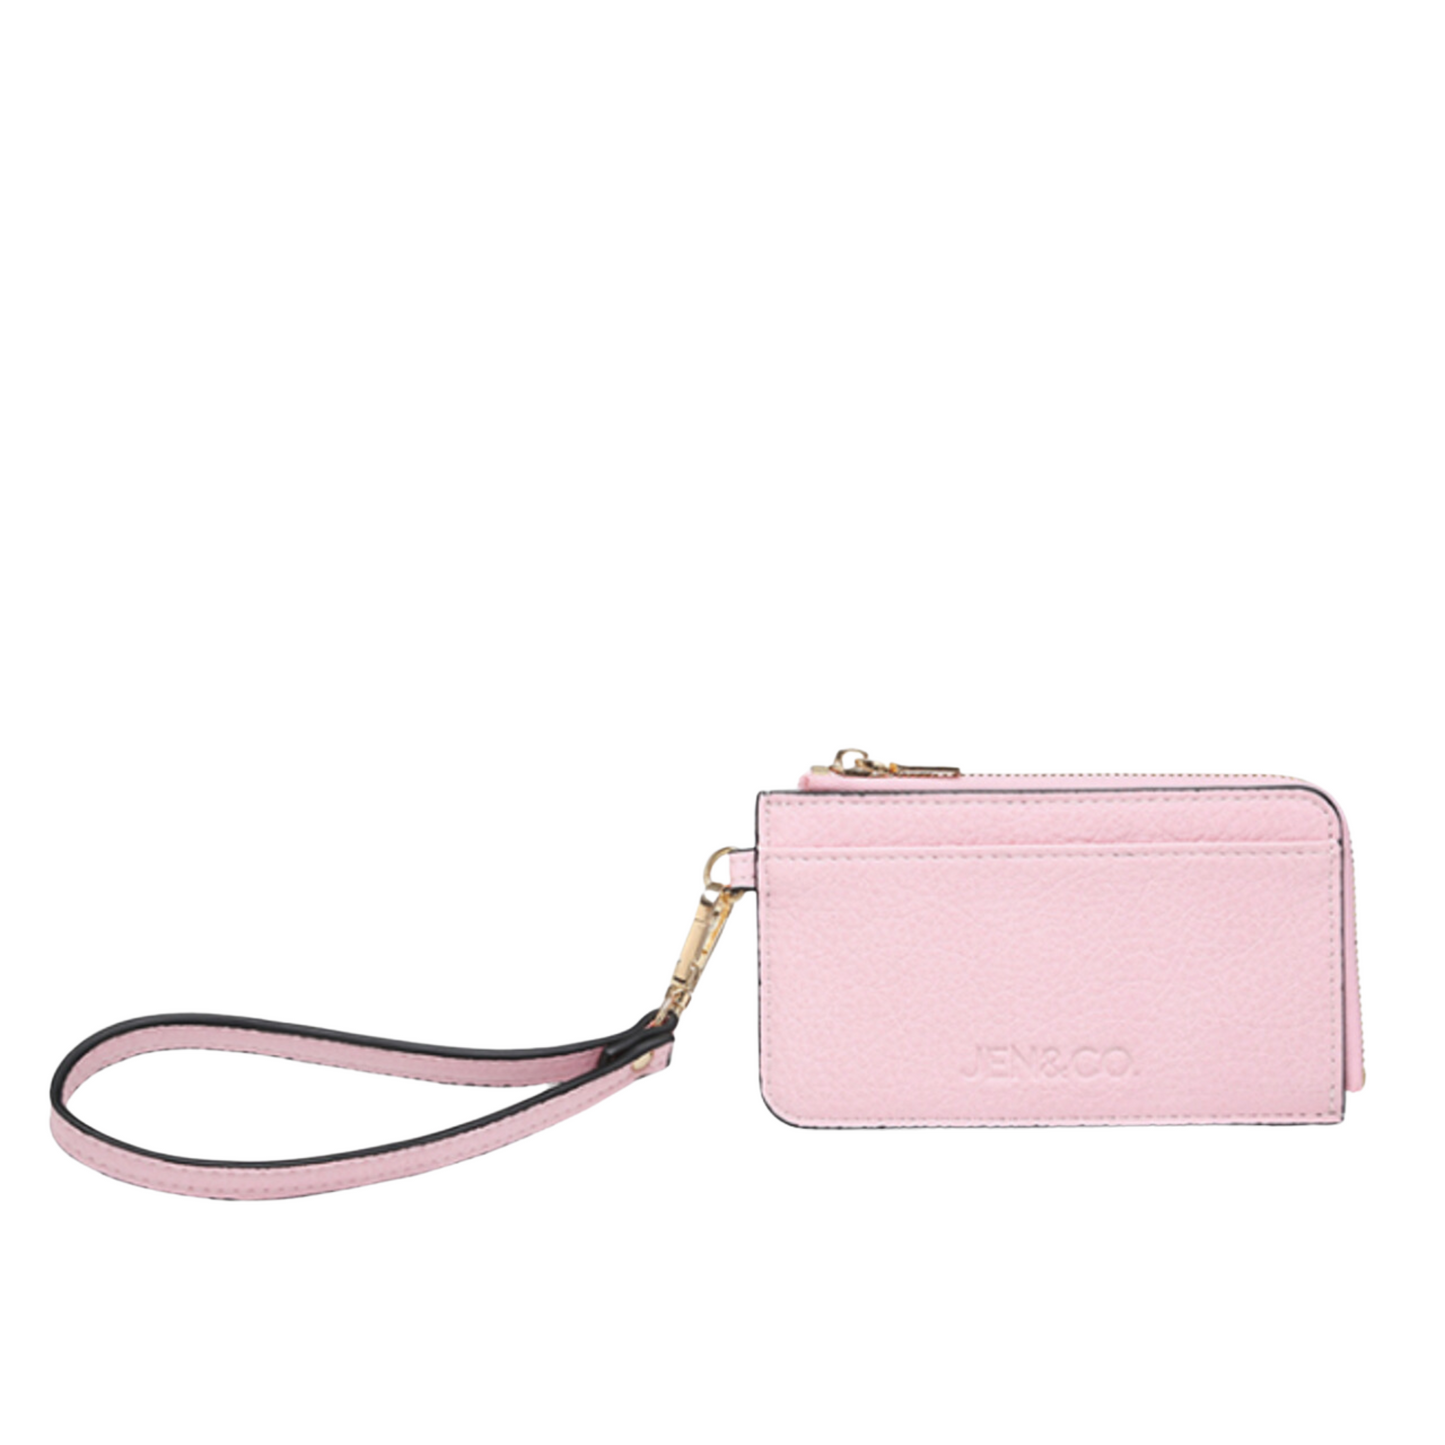 Annalise wallet in ballet pink